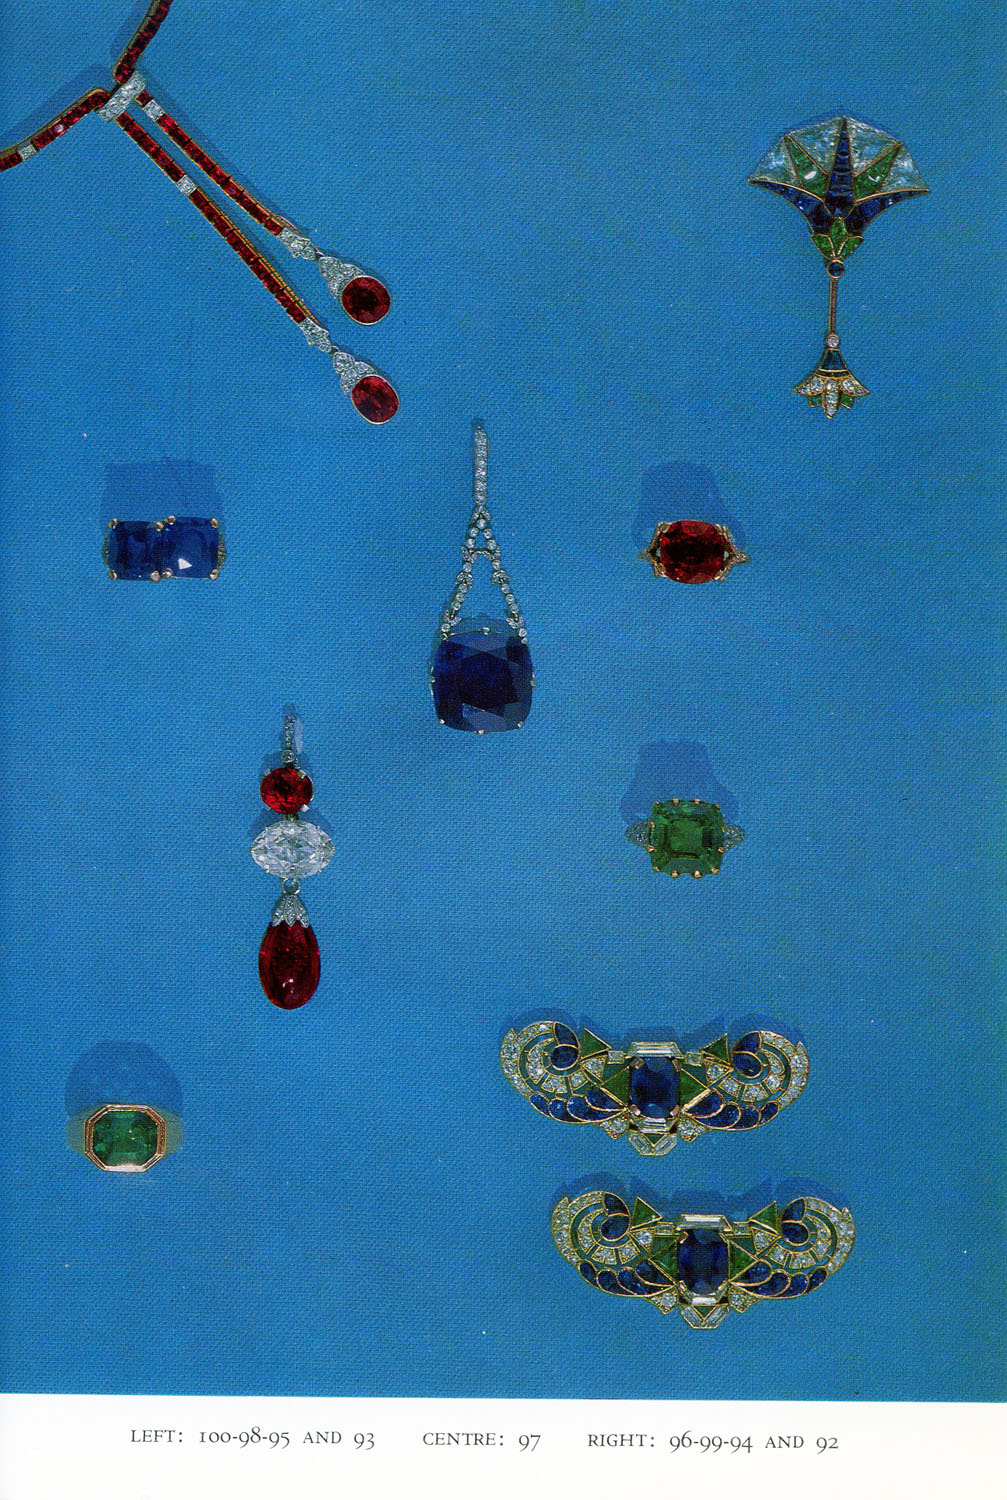 Jewelry, Including 24.9 carat sapphire and diamond pendant (97, center), 9 carat emerald and diamond ring (94, right, lower middle), and diamond and sapphire broochs (92, lower right).